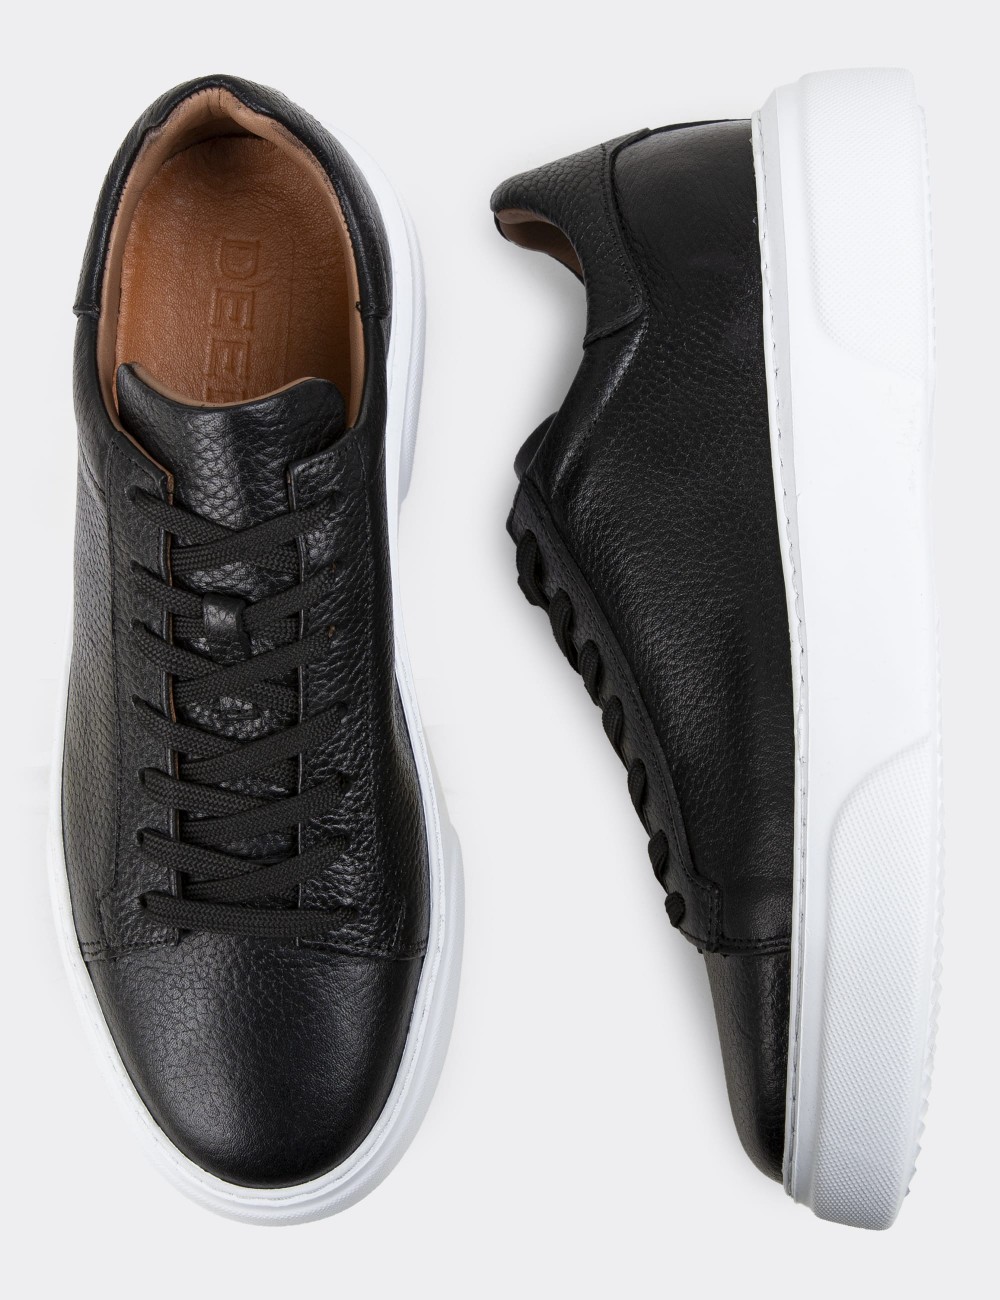 Black Leather Sneakers - M2501MSYHP01